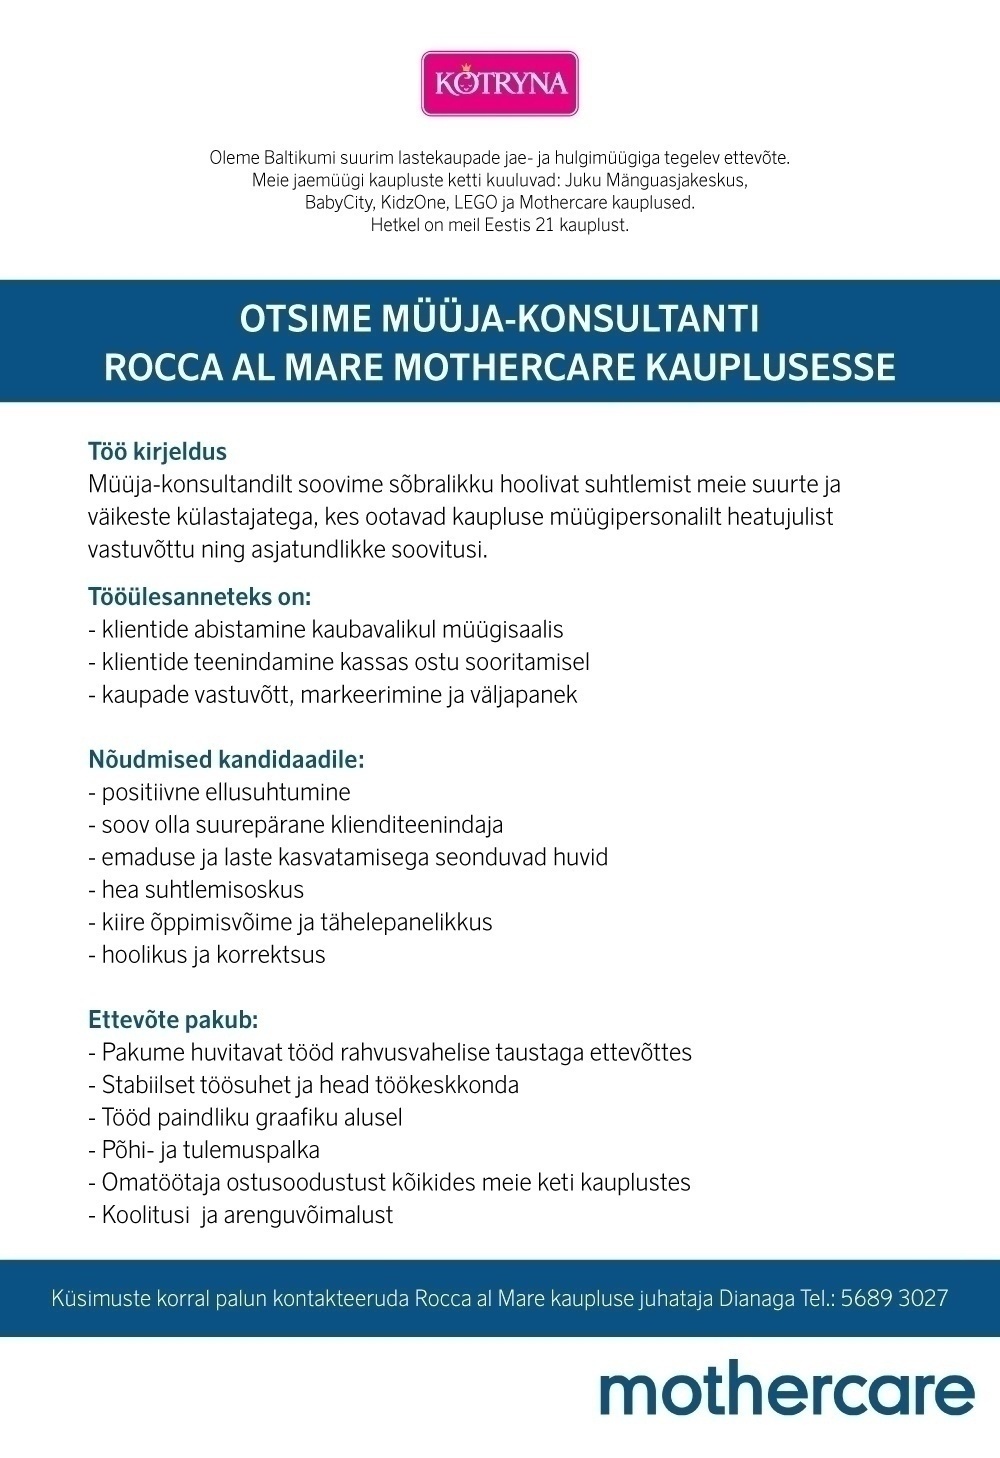 Kotryna OÜ Rocca al Mare Mothercare müüja-konsultant